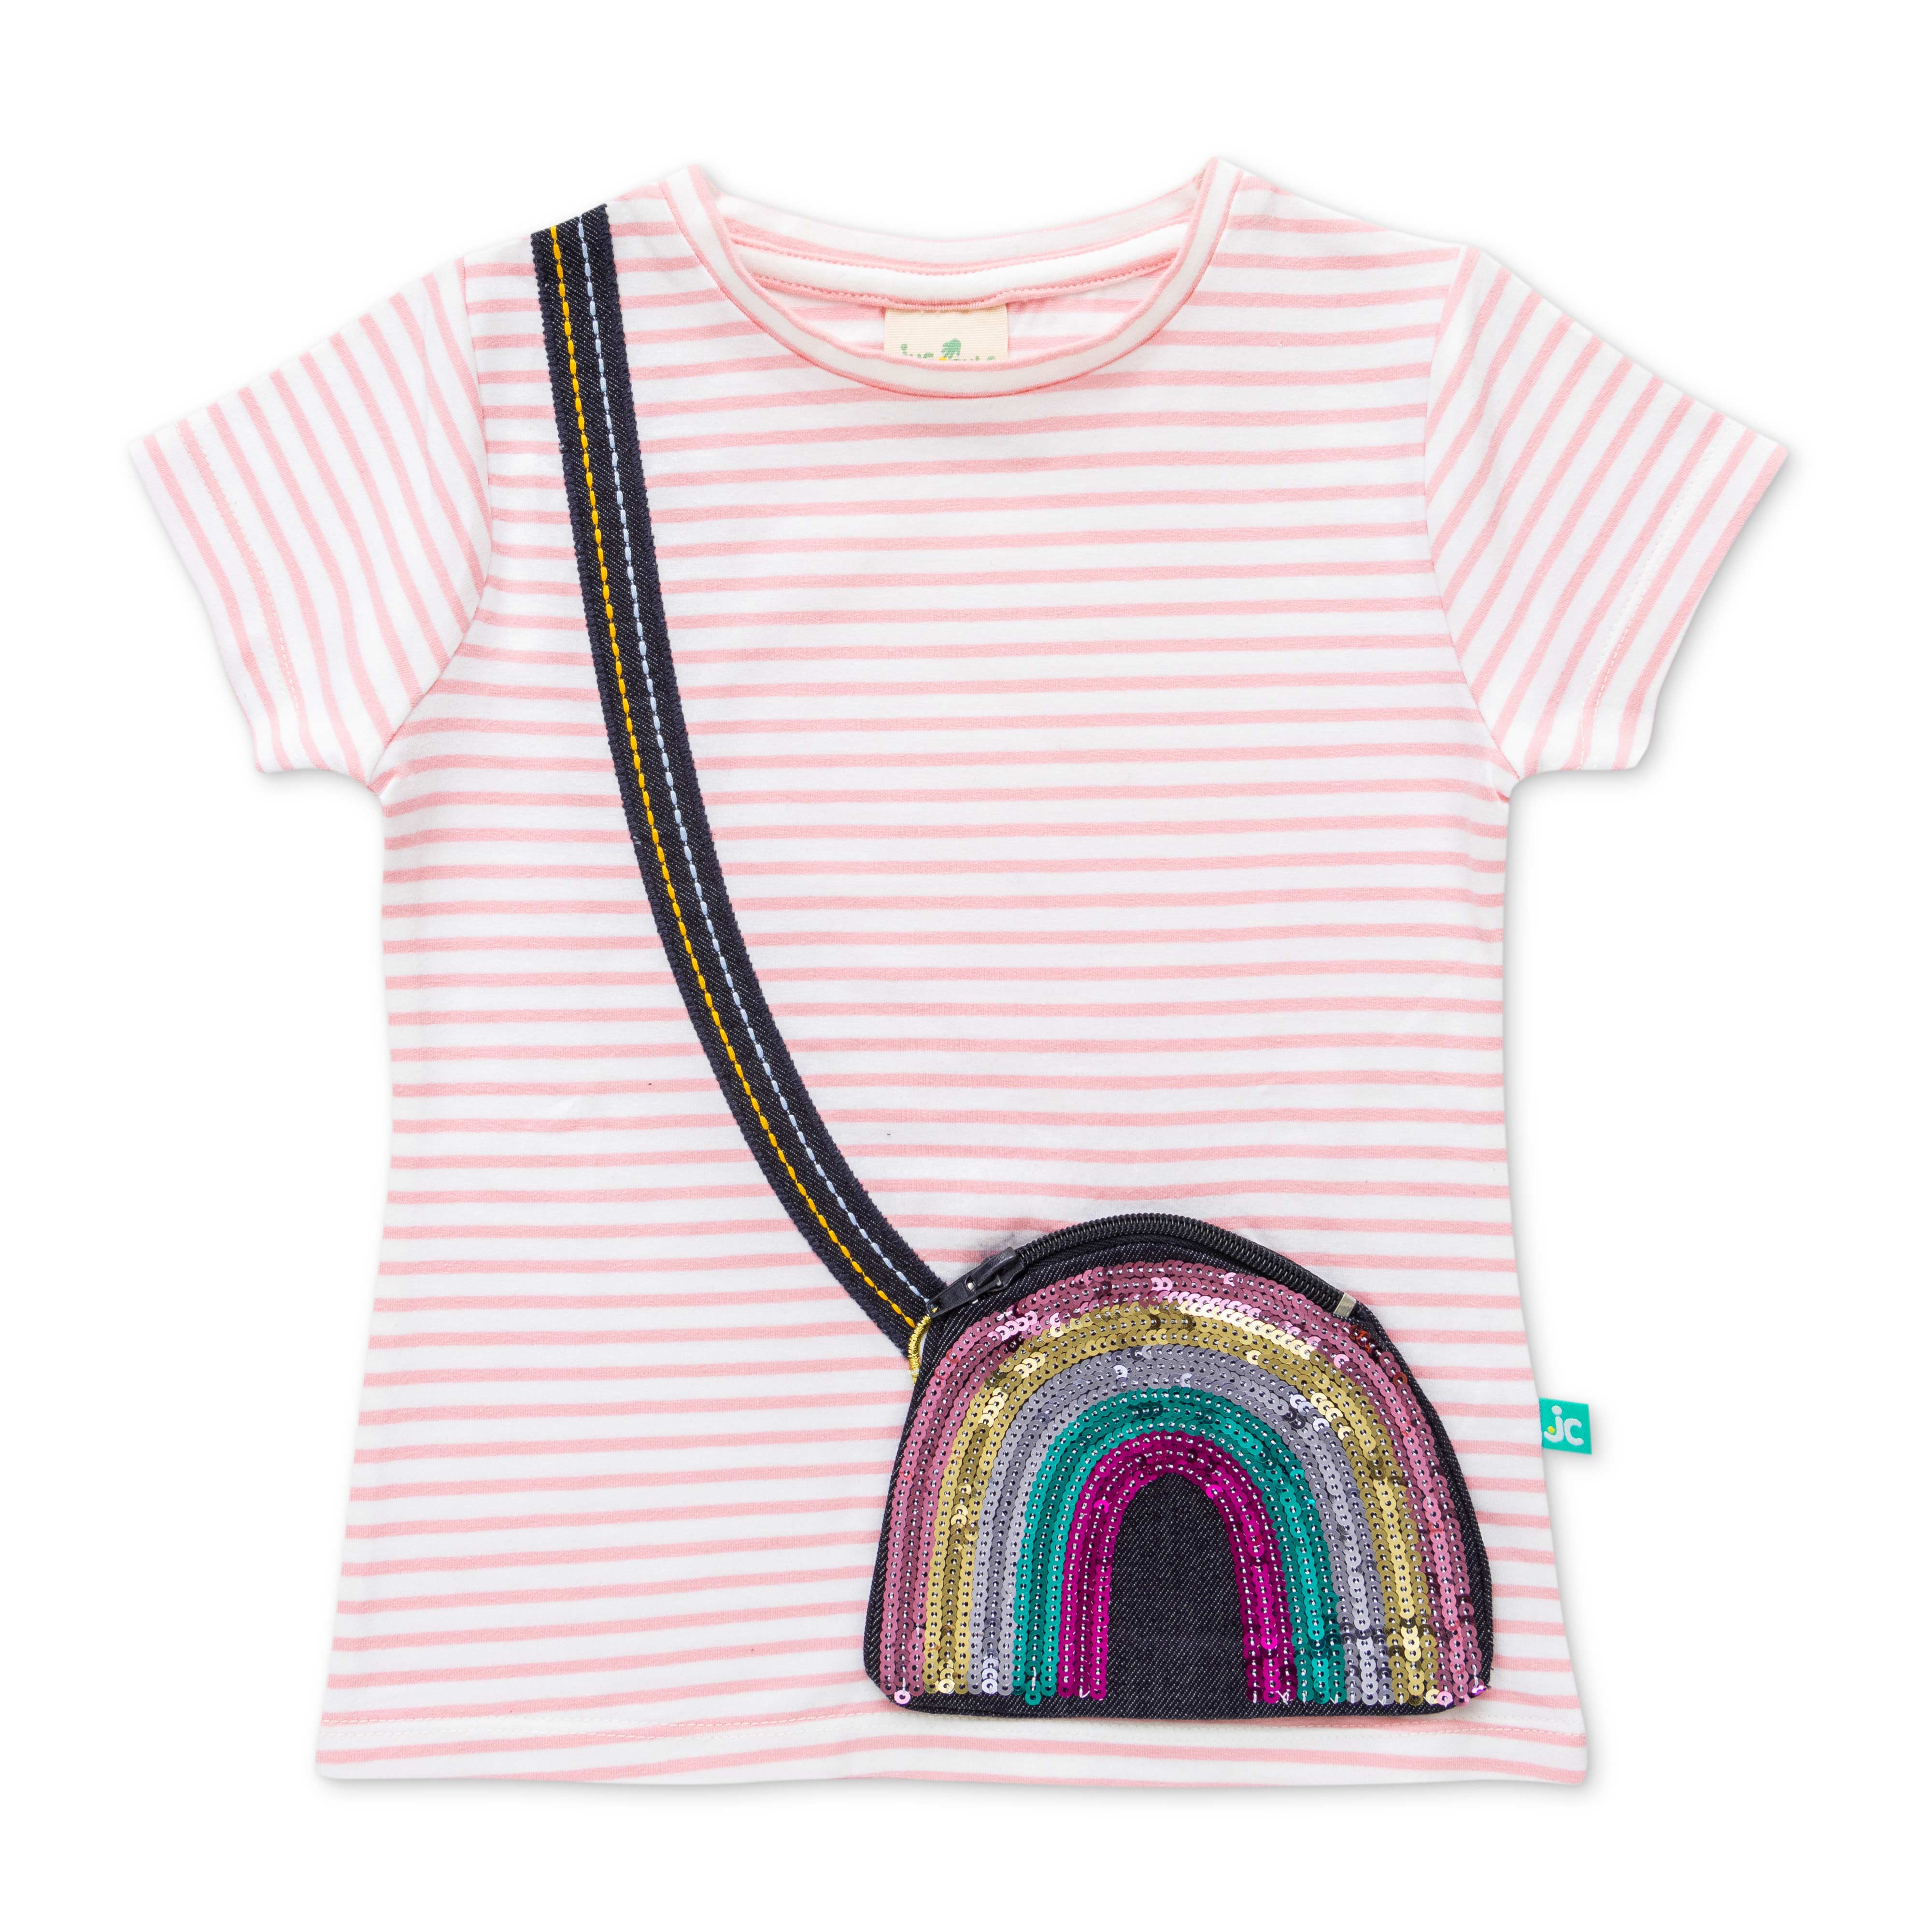 Girls Cotton Toddler Striped T Shirt With Embellished Pocket Round Neck Pink